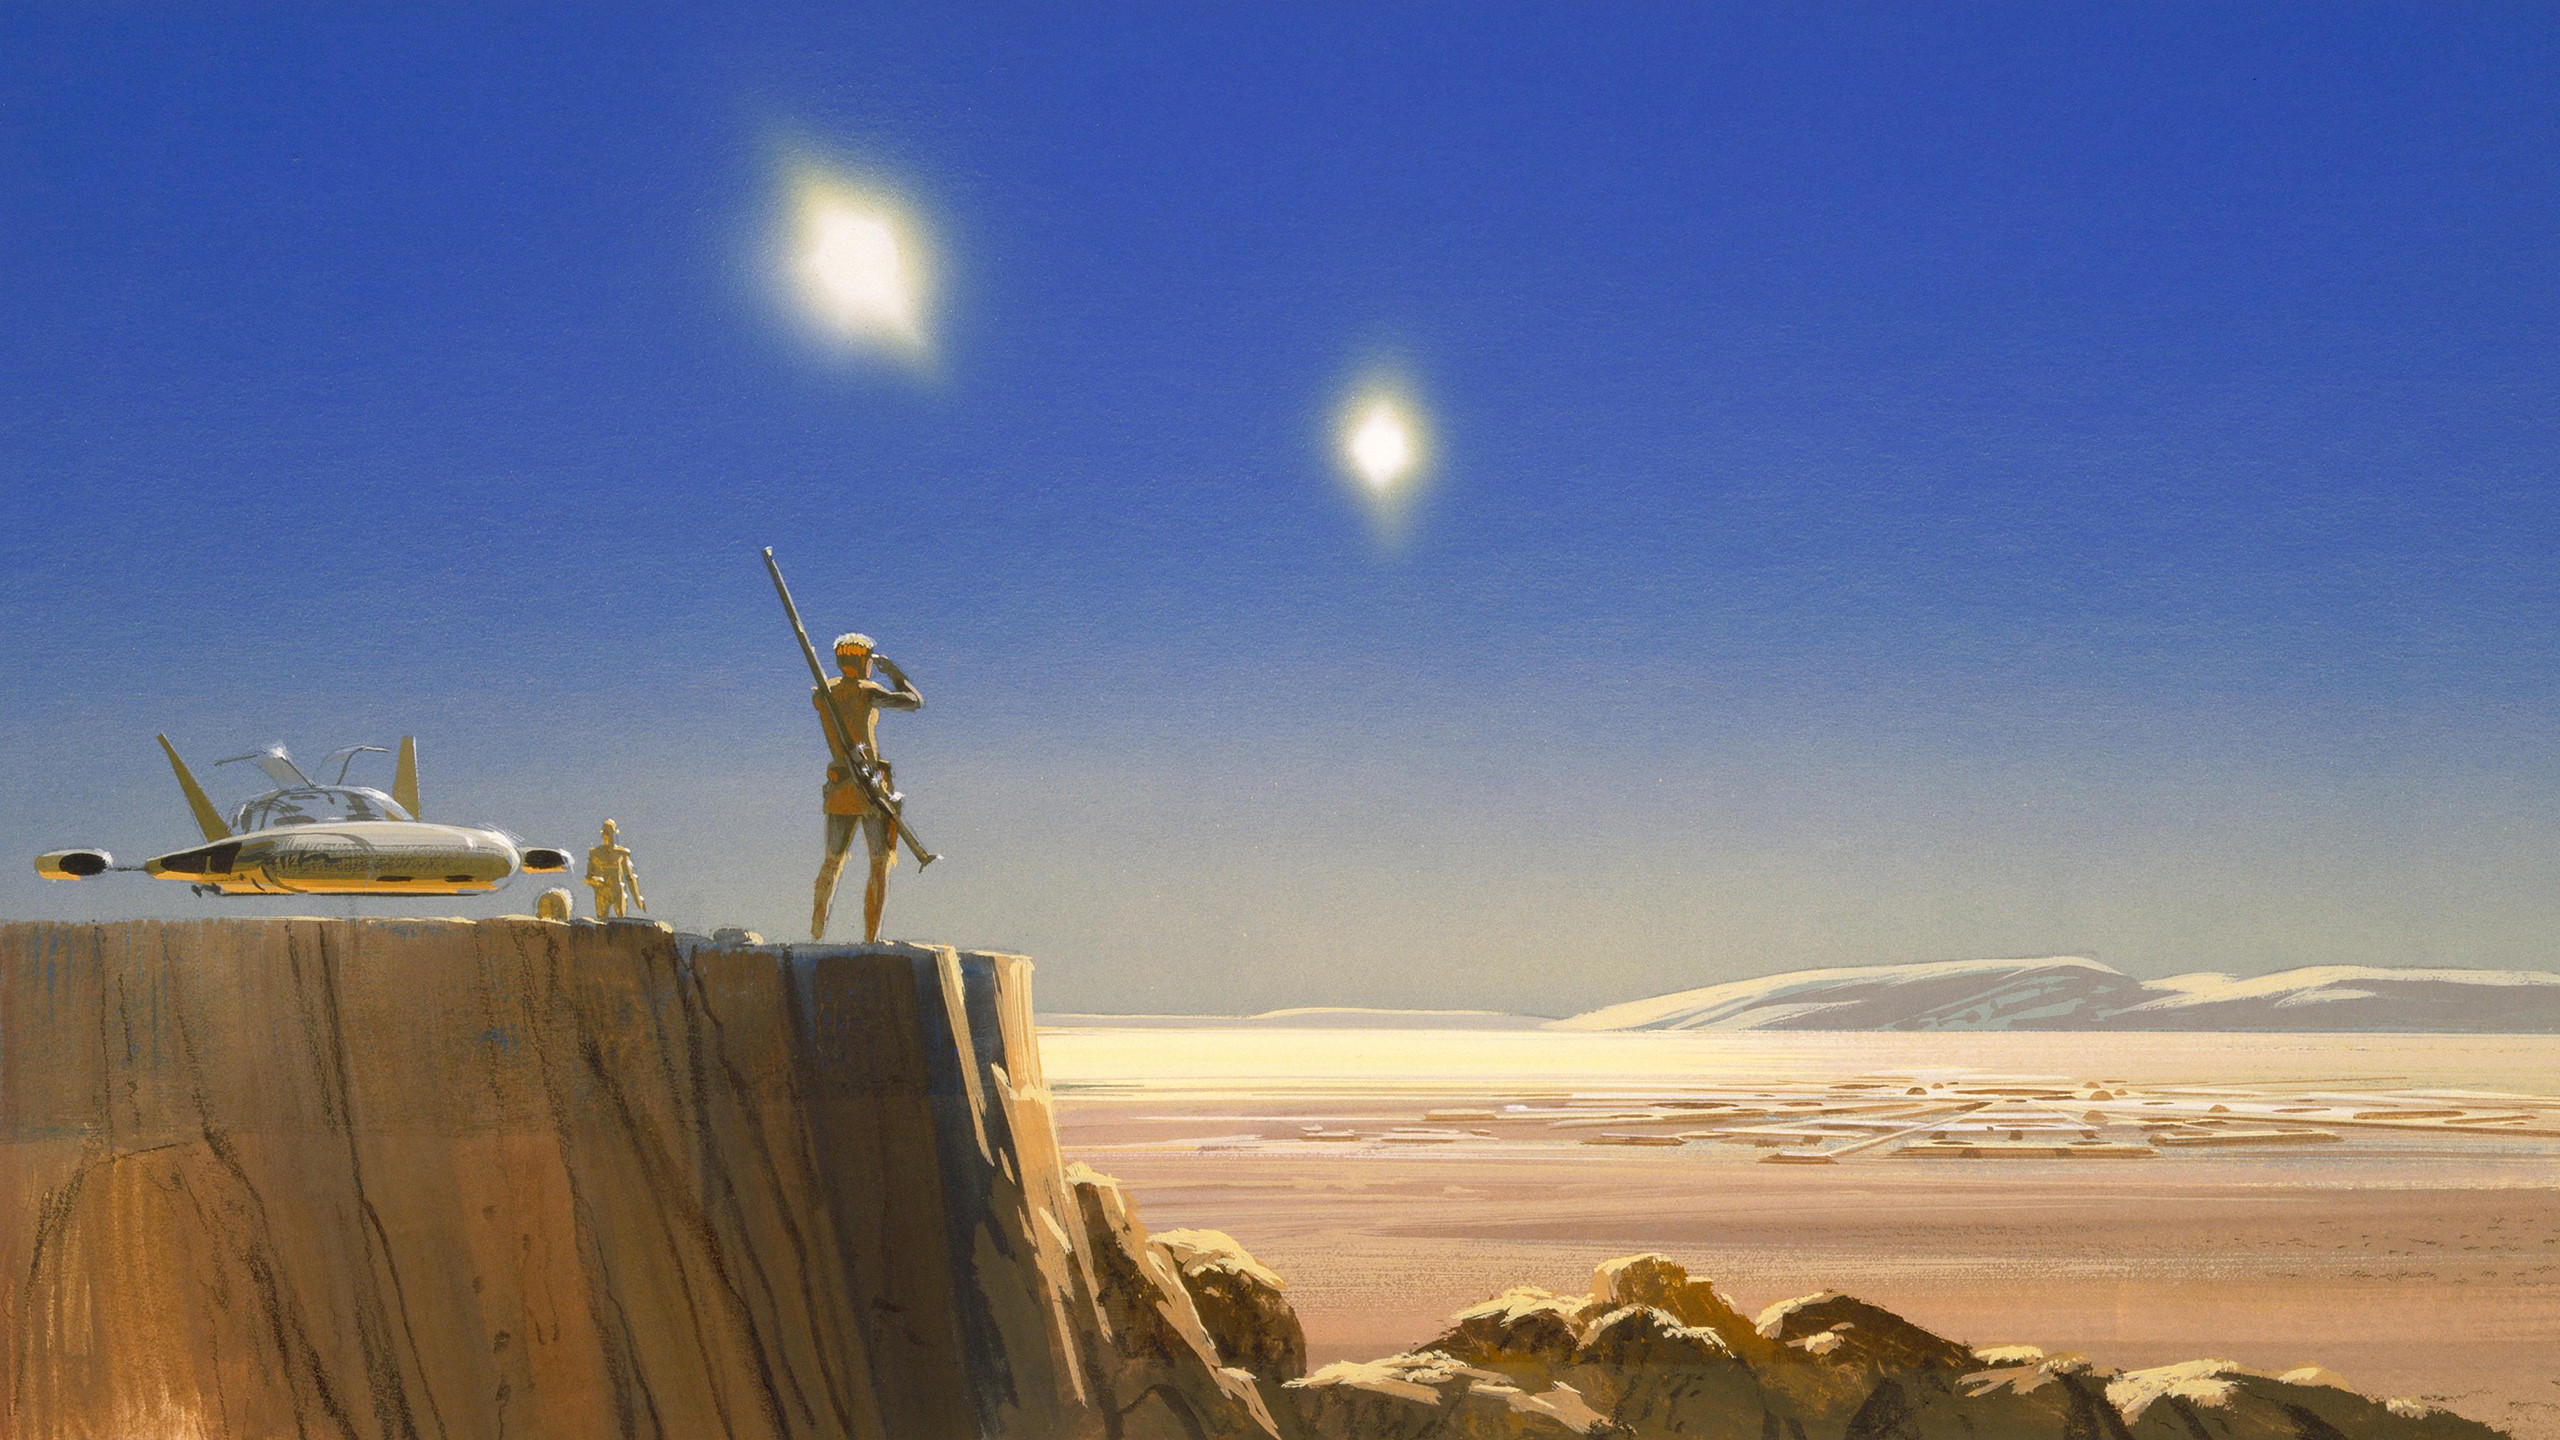 Artwork Painting Fantasy Art Space Sky Science Fiction Planet Landscape Star Wars Luke Skywalker Tat 2560x1440